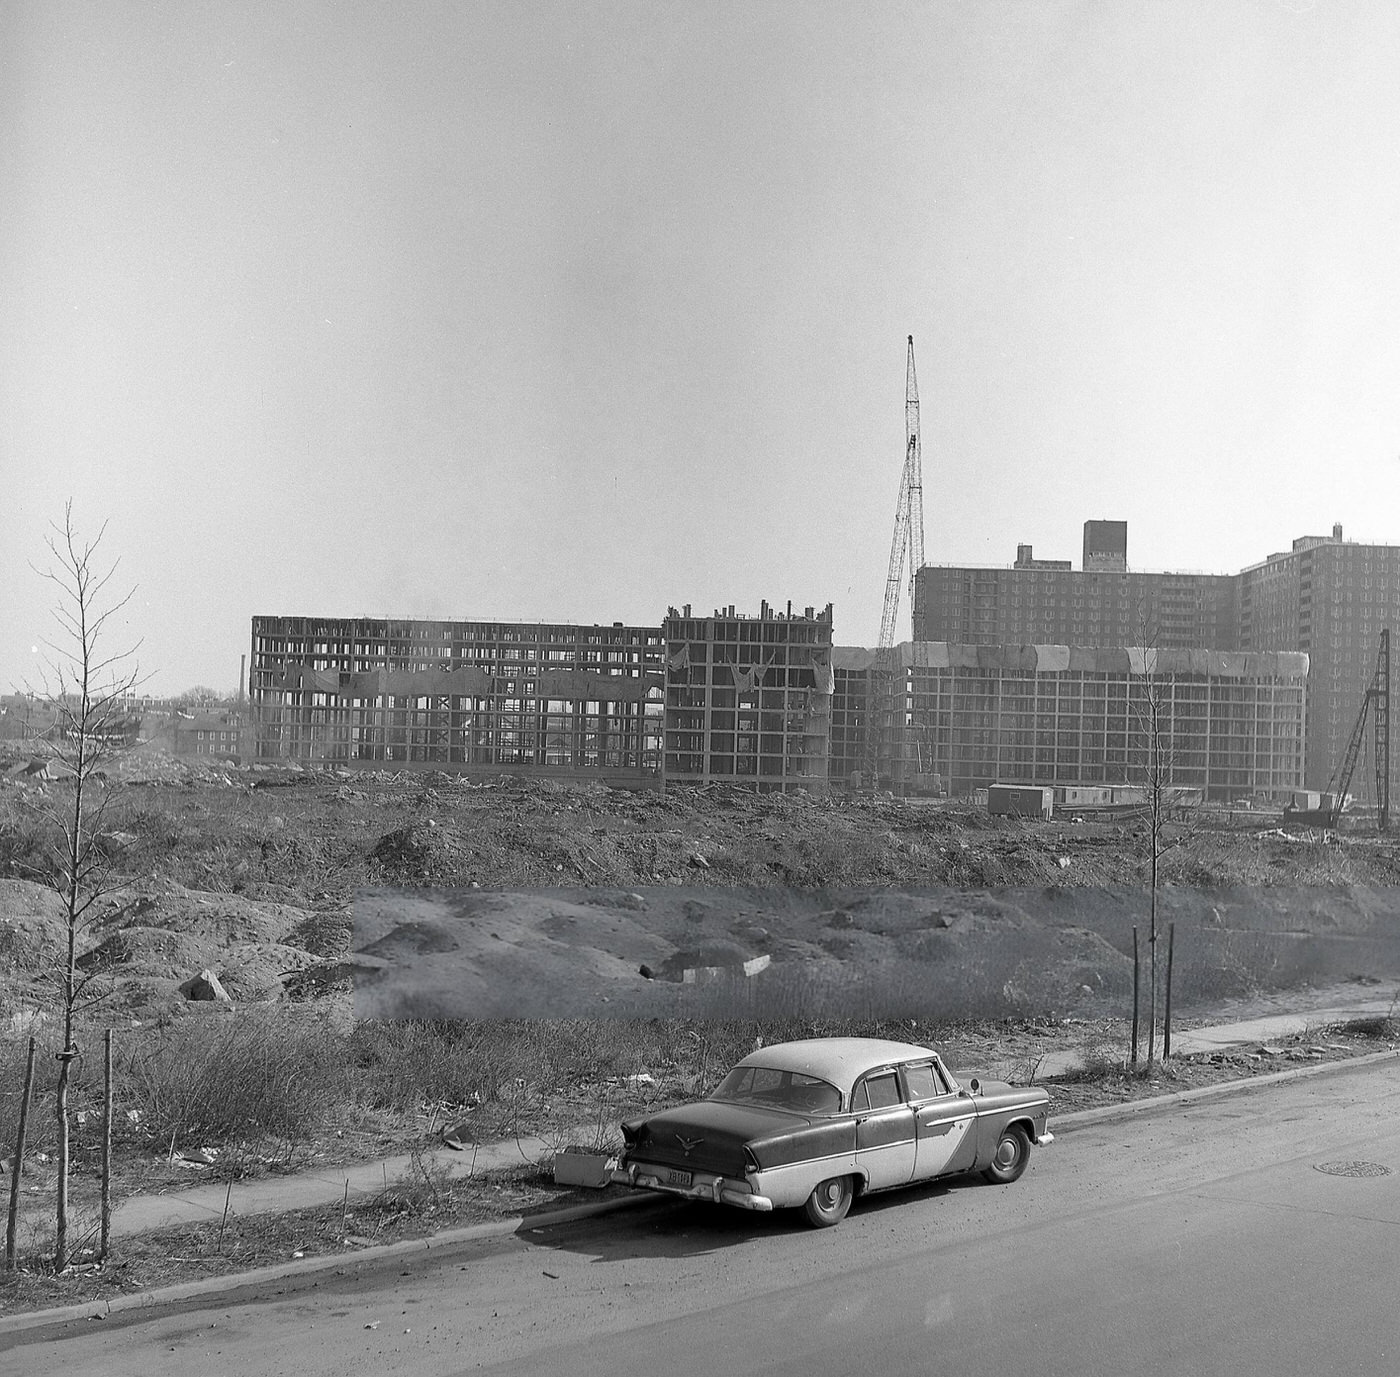 Construction Of The Lefrak City Apartment Complex On The Border Of Elmhurst-Corona, Queens, 1963.